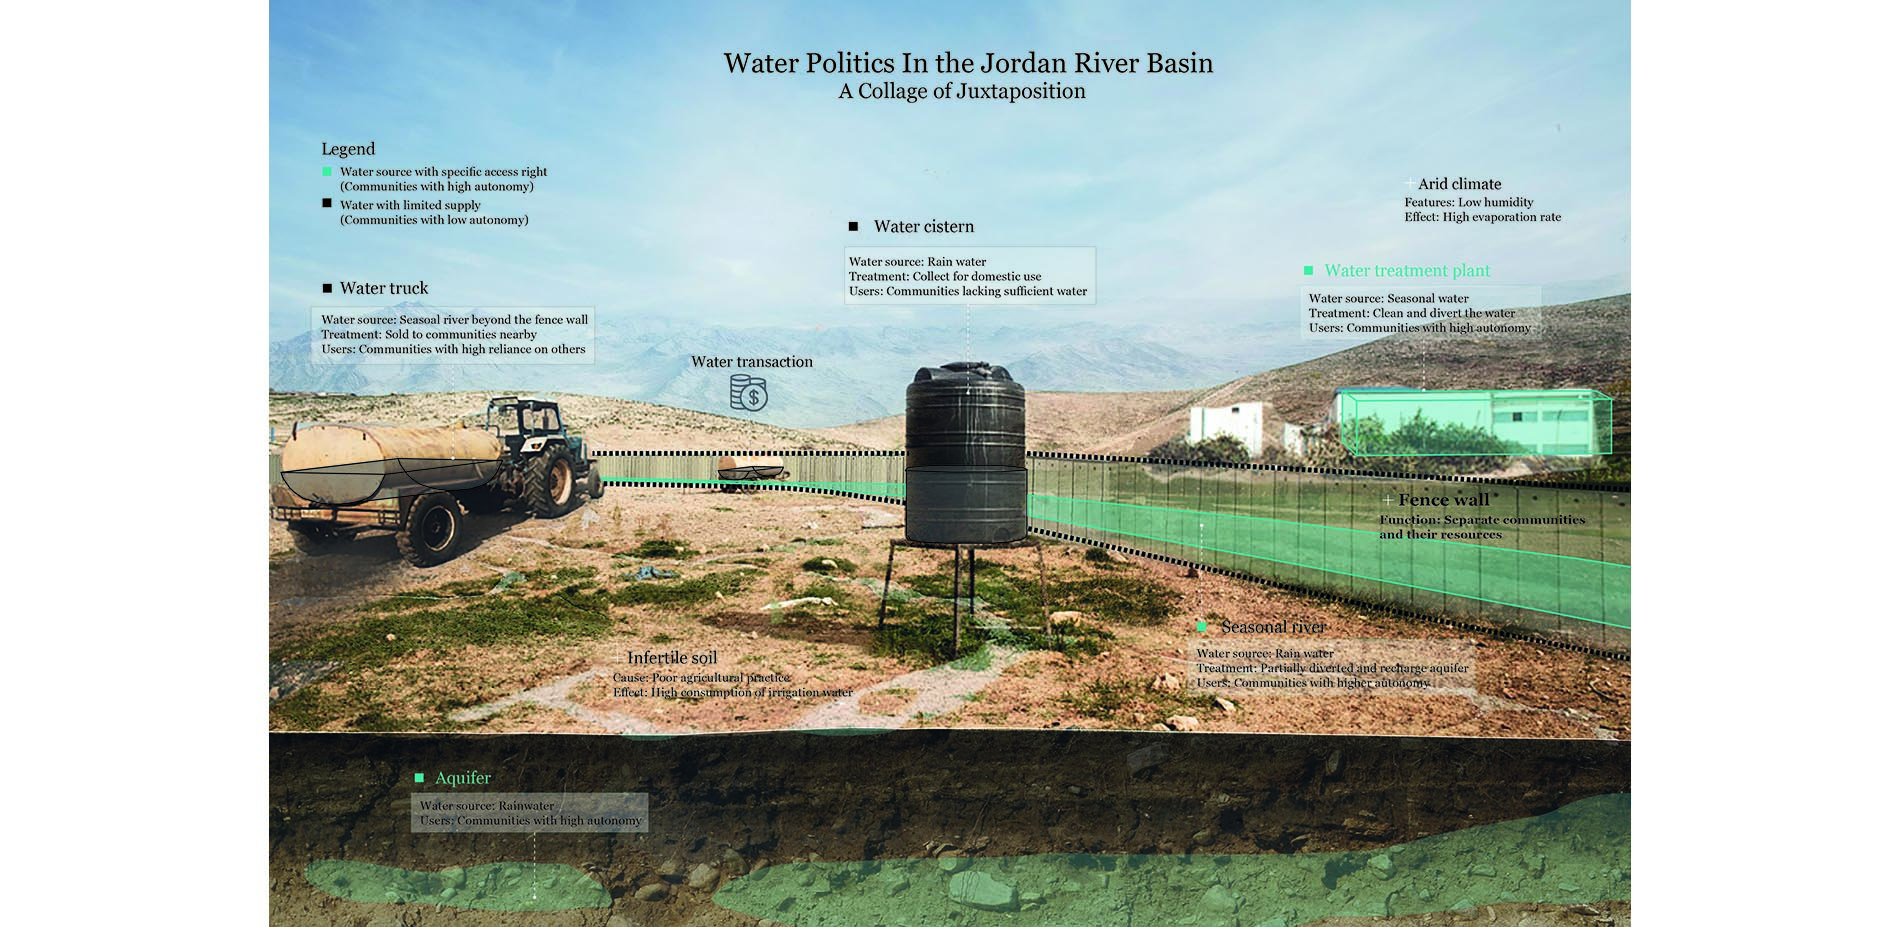 Investigation: Water politics- Unequal water rights in Jordan River basin